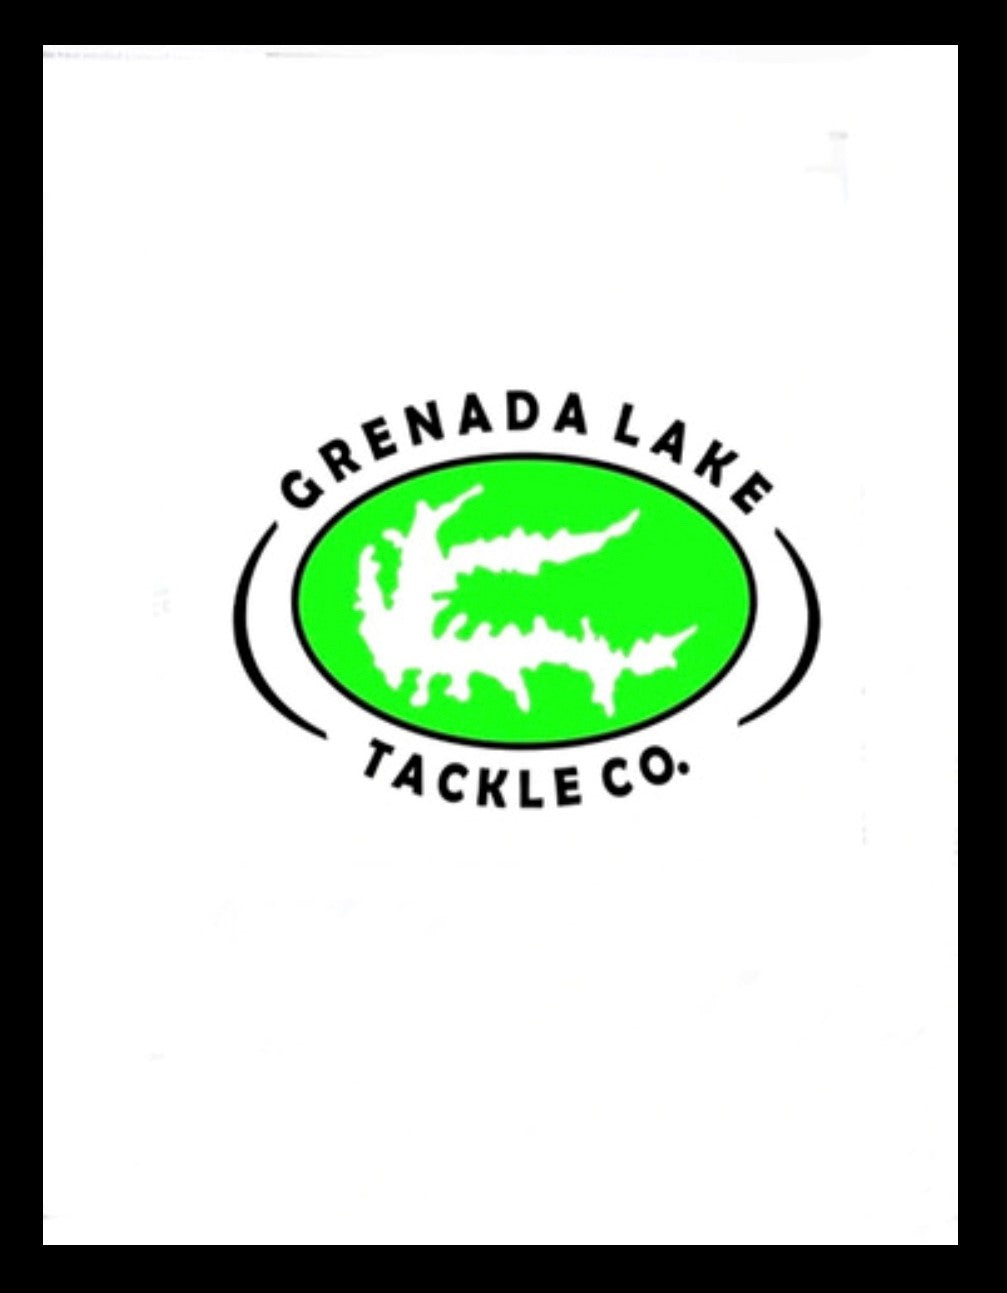 Grenada Lake Tackle Company